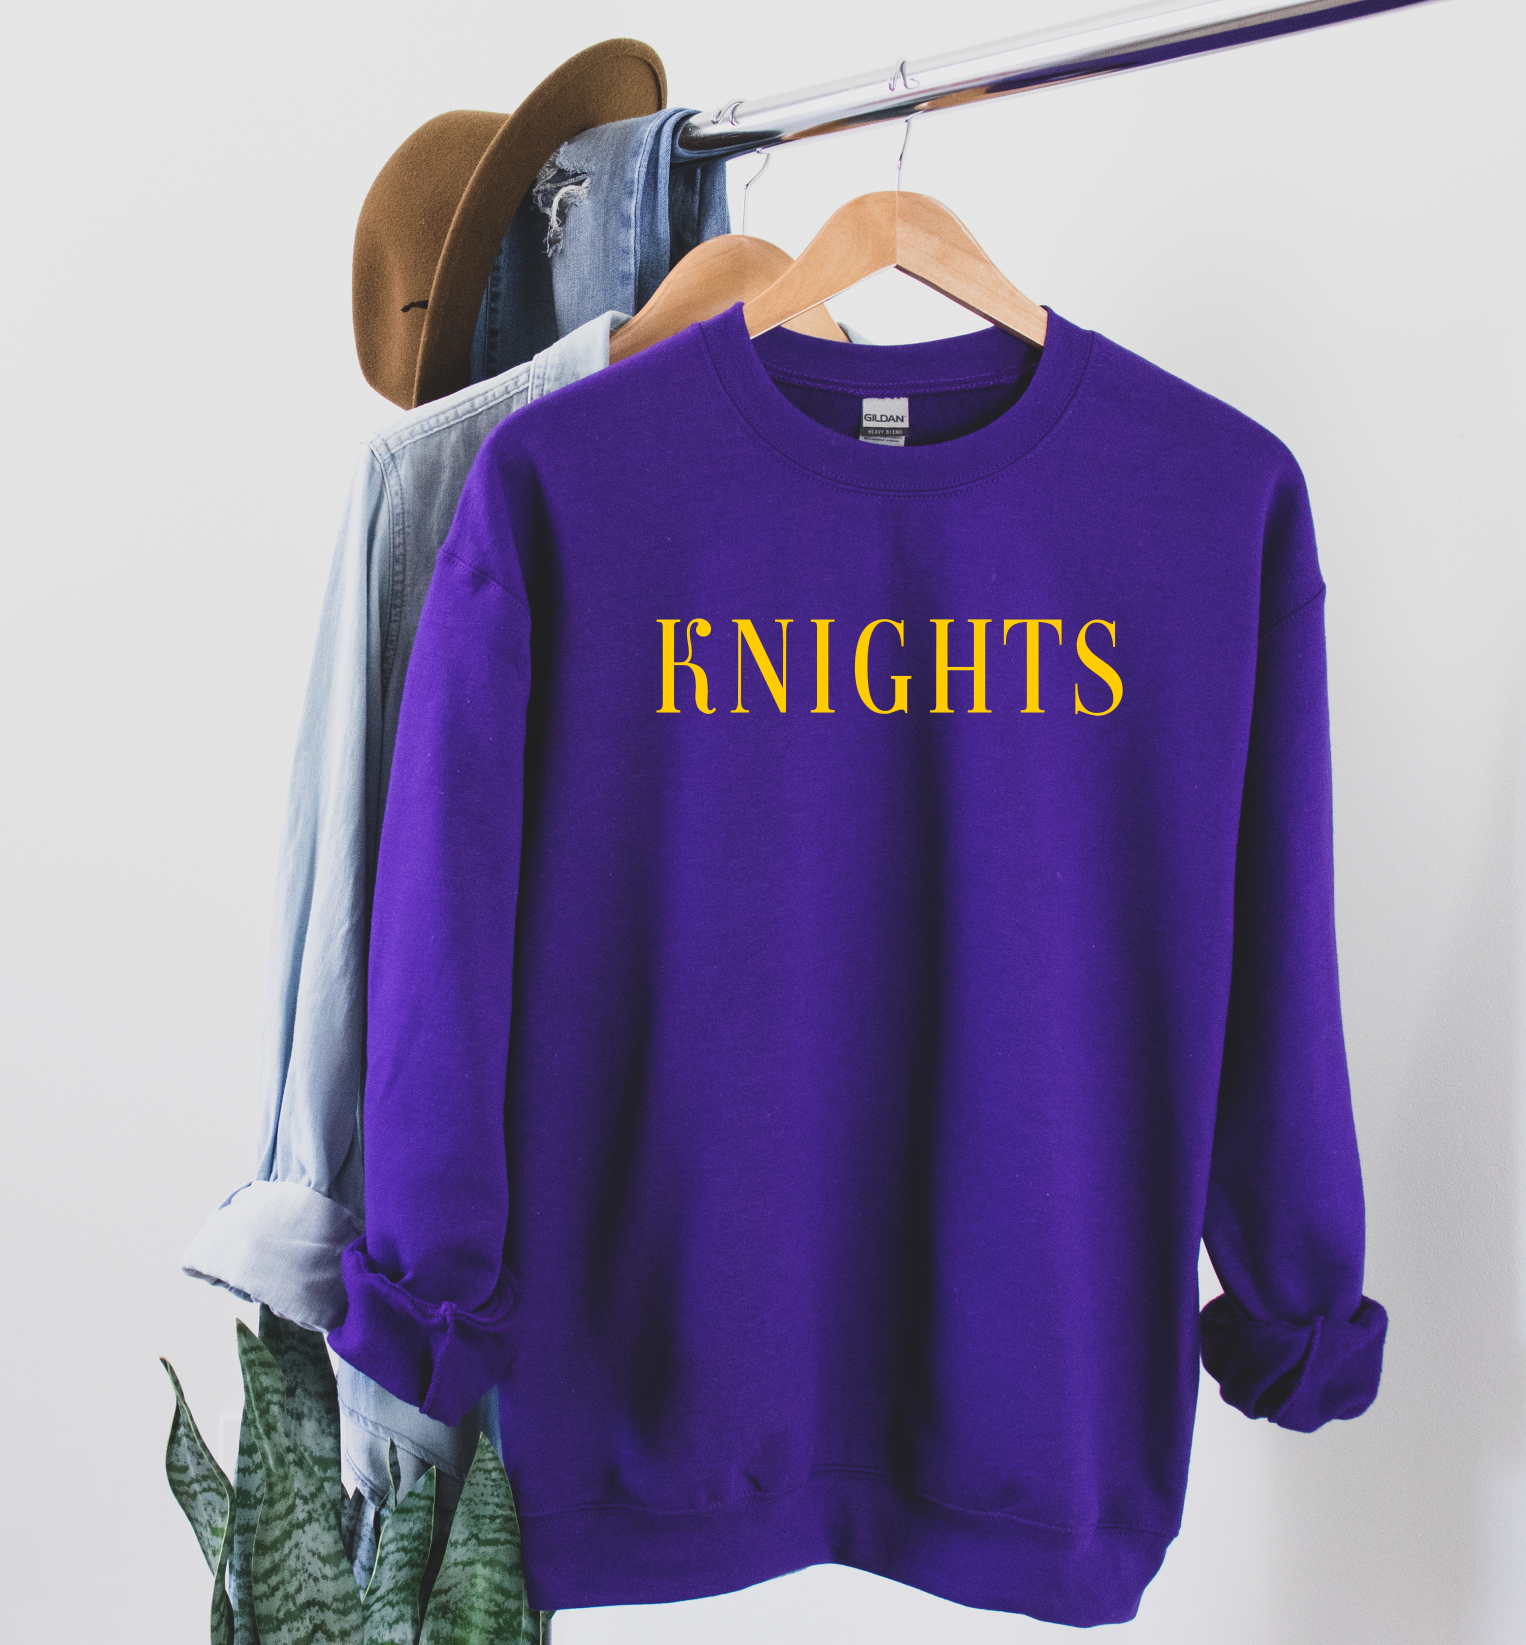 Knights Crew Neck Sweater